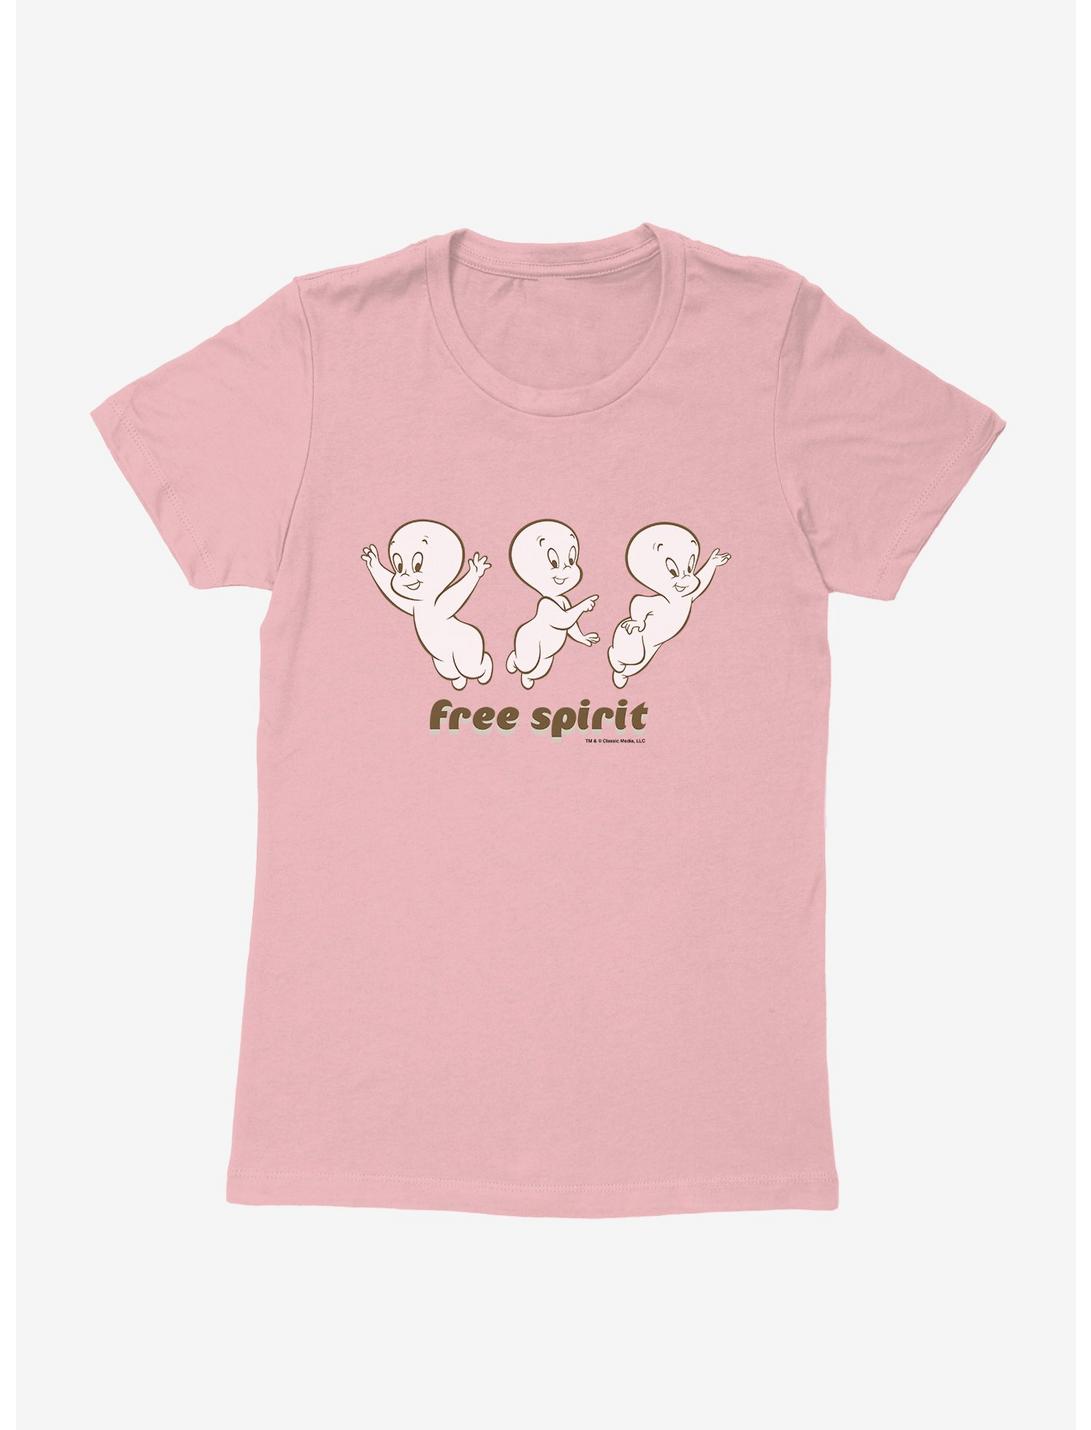 Casper The Friendly Ghost Free Spirit Womens T-Shirt, LIGHT PINK, hi-res